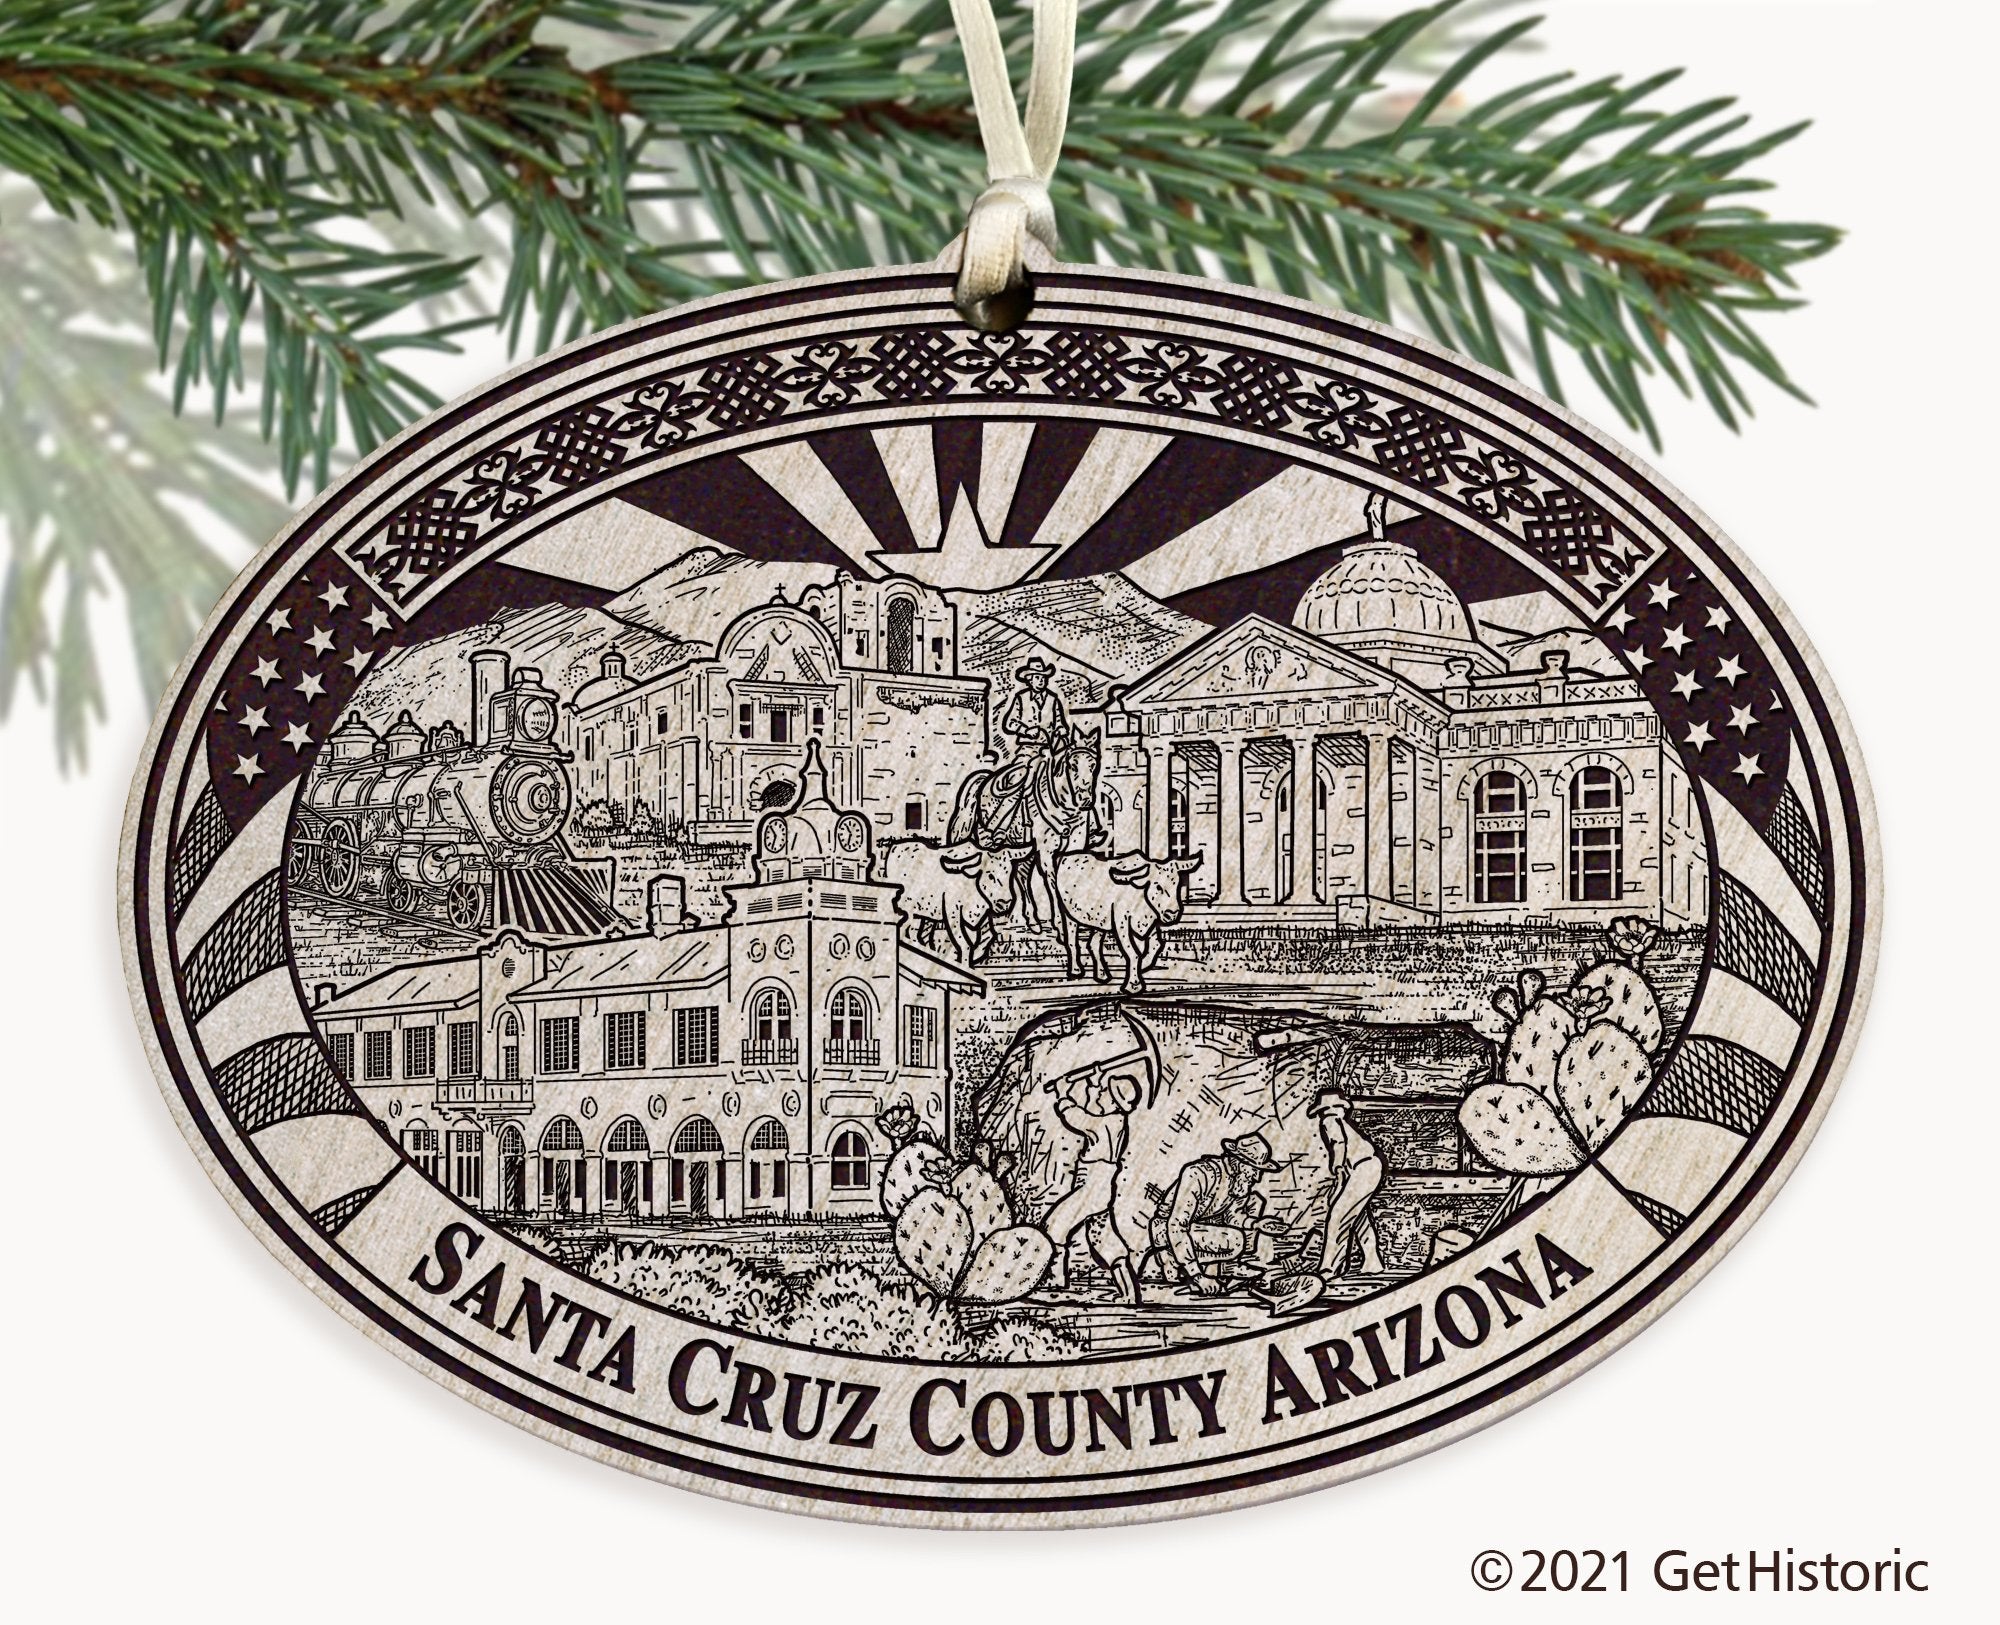 Santa Cruz County Arizona Engraved Ornament